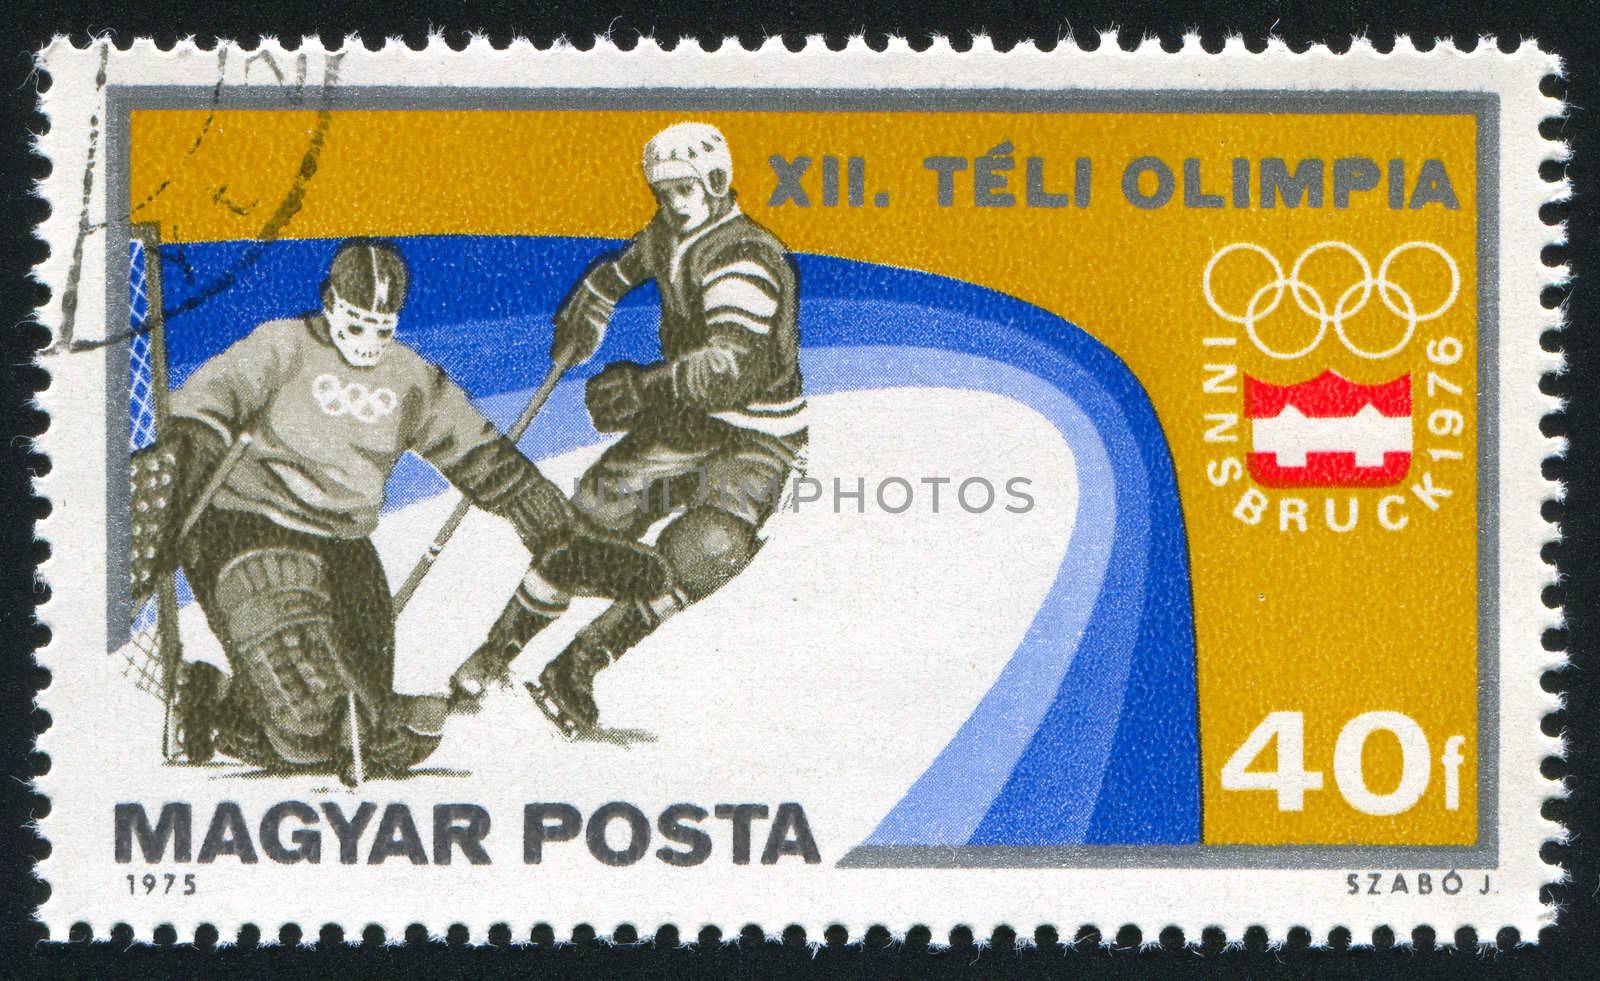 HUNGARY - CIRCA 1975: stamp printed by Hungary, shows hockey, circa 1975